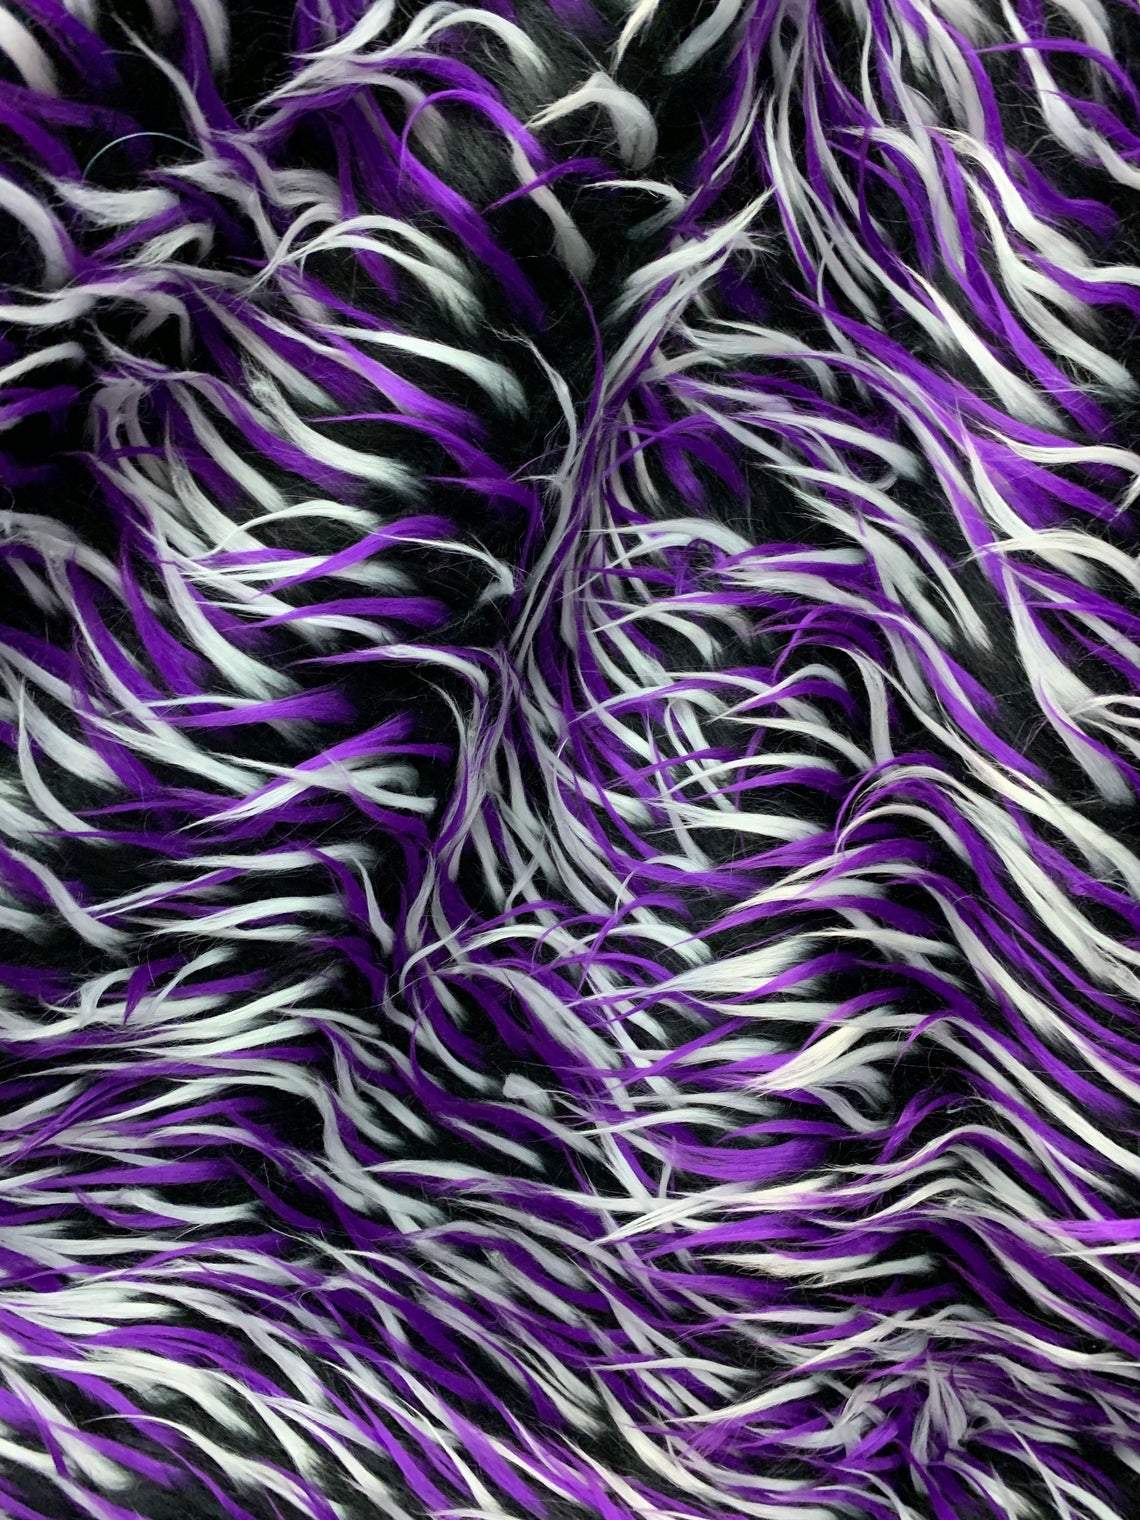 Purple, White, and Black Faux Fur Fabric By The Yard 3 Tone Fashion Fabric MaterialICE FABRICSICE FABRICSPurple, White, and Black Faux Fur Fabric By The Yard 3 Tone Fashion Fabric Material ICE FABRICS